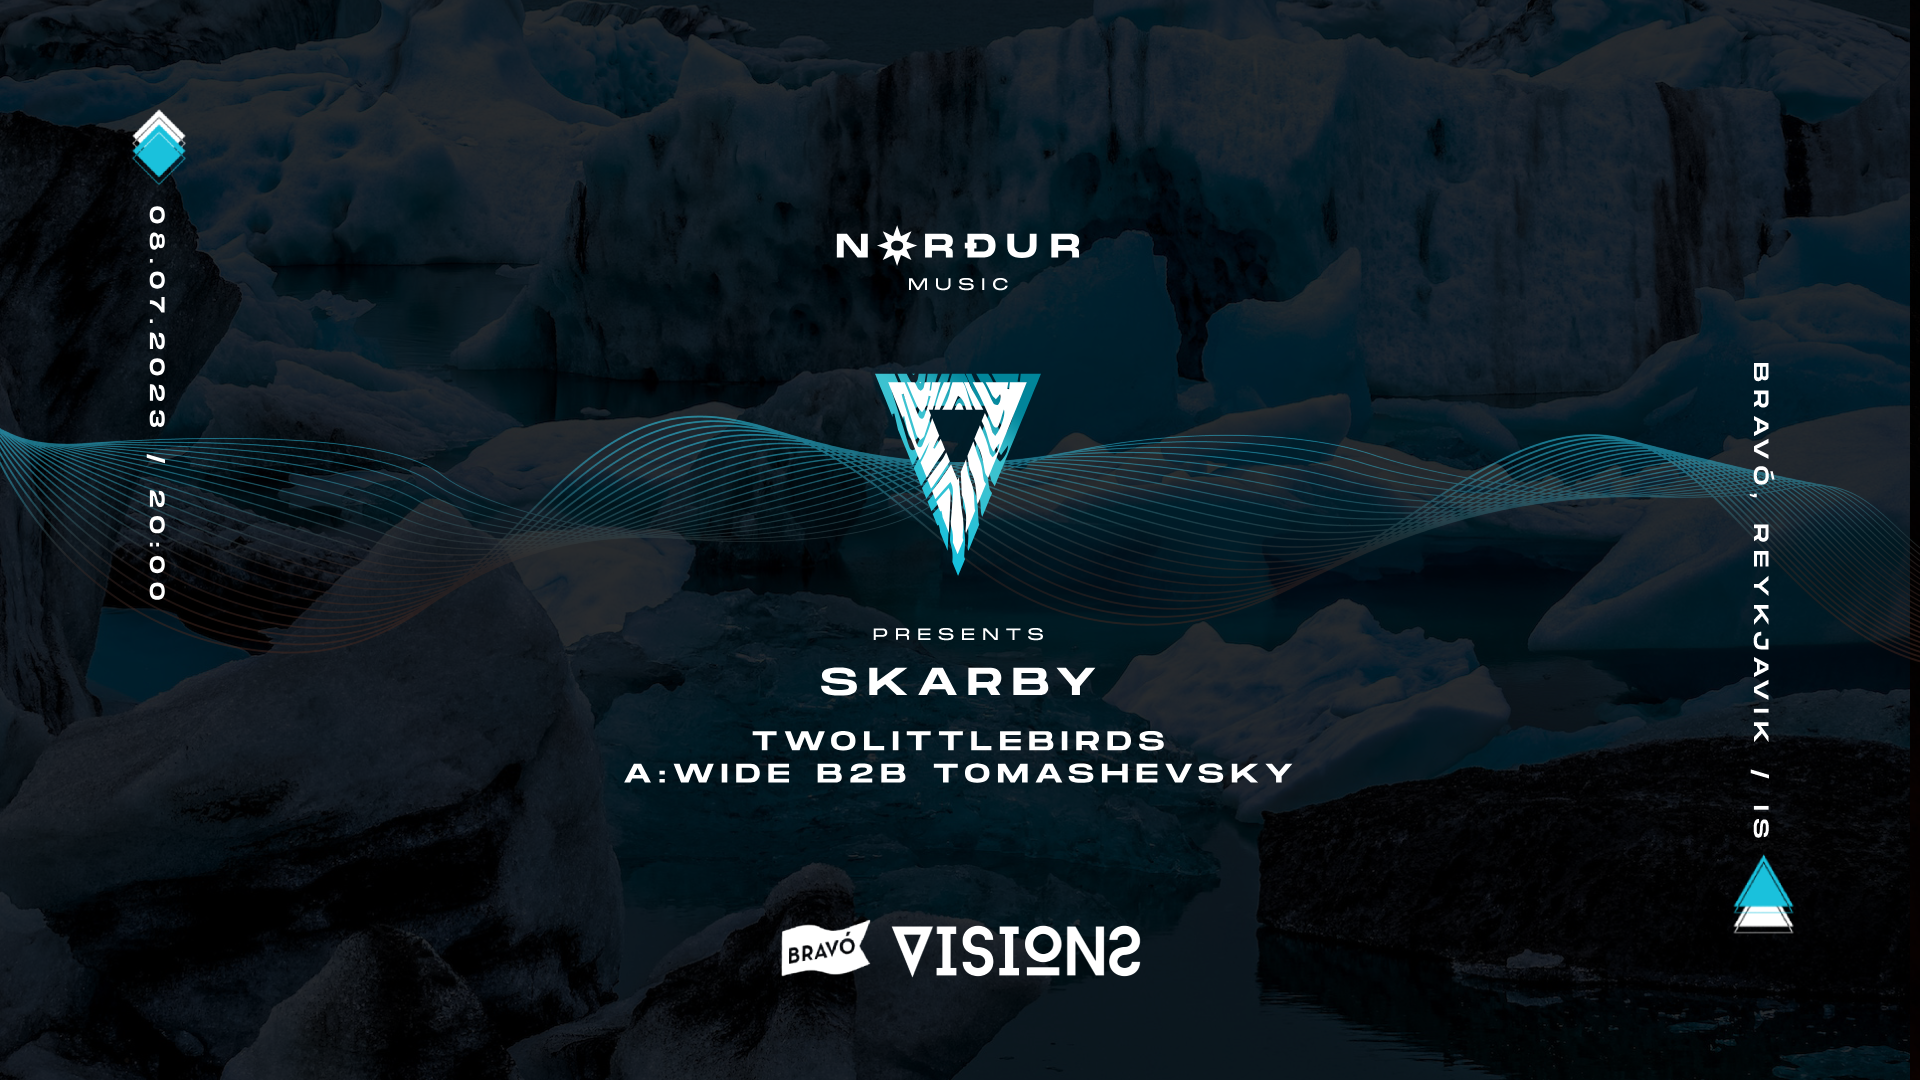 Nordur Music pres. Skarby - フライヤー表